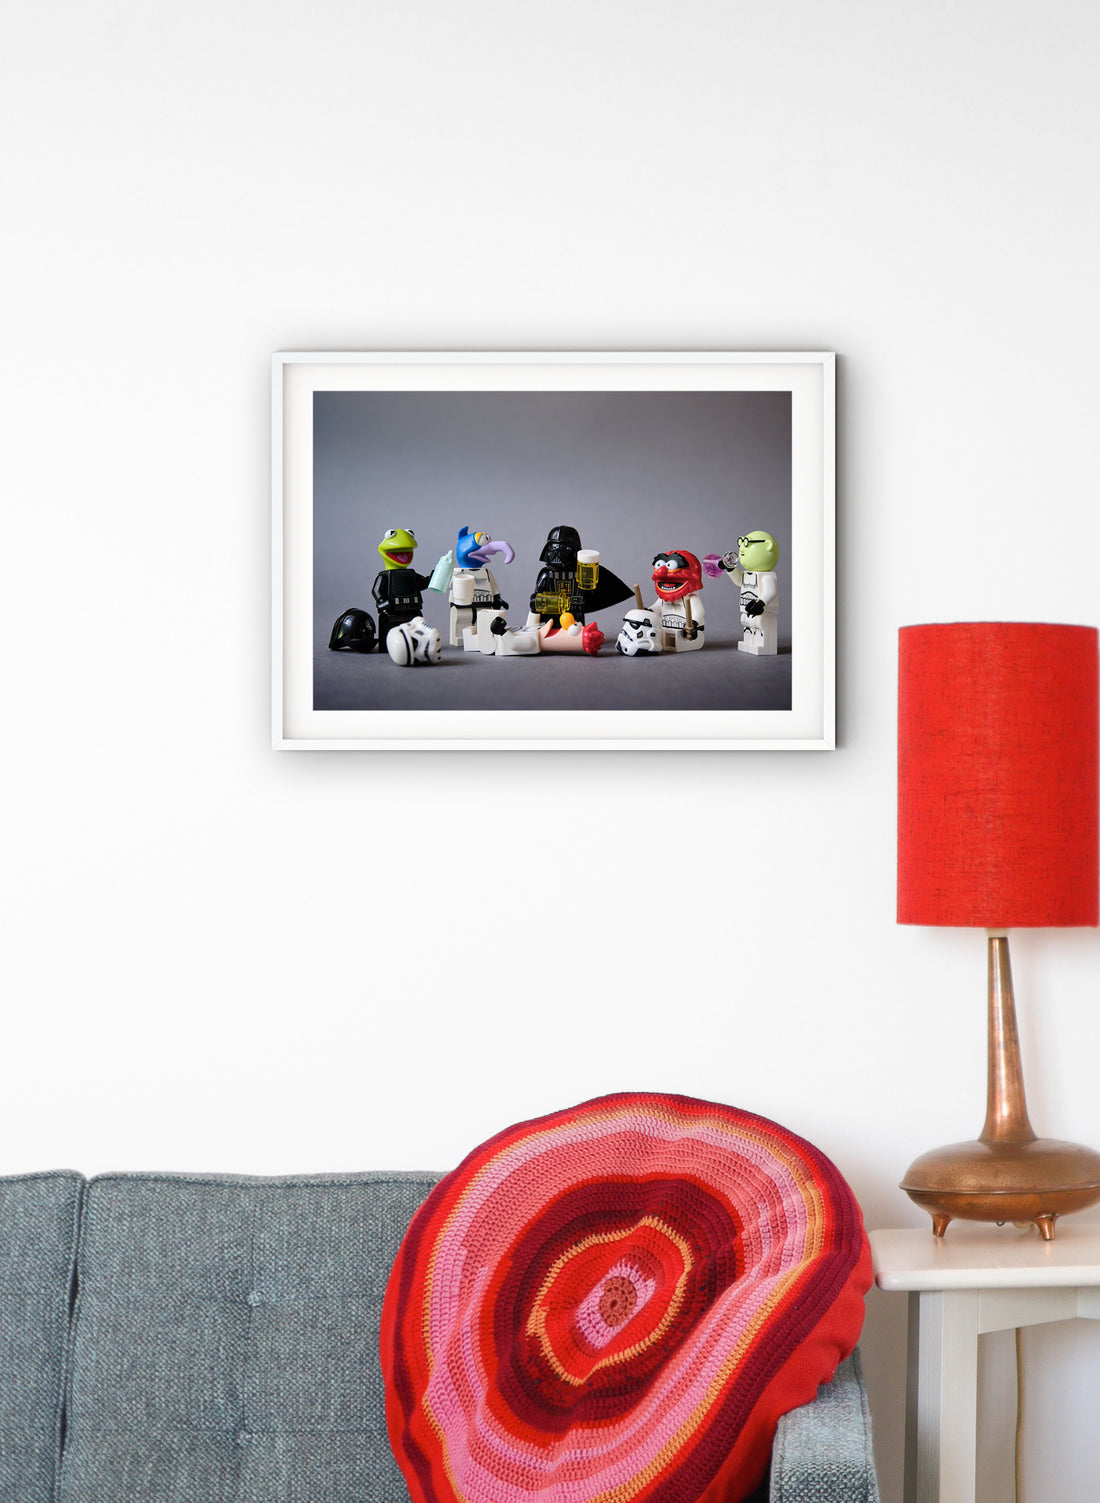 TGIF You Muppets - Photographic Print